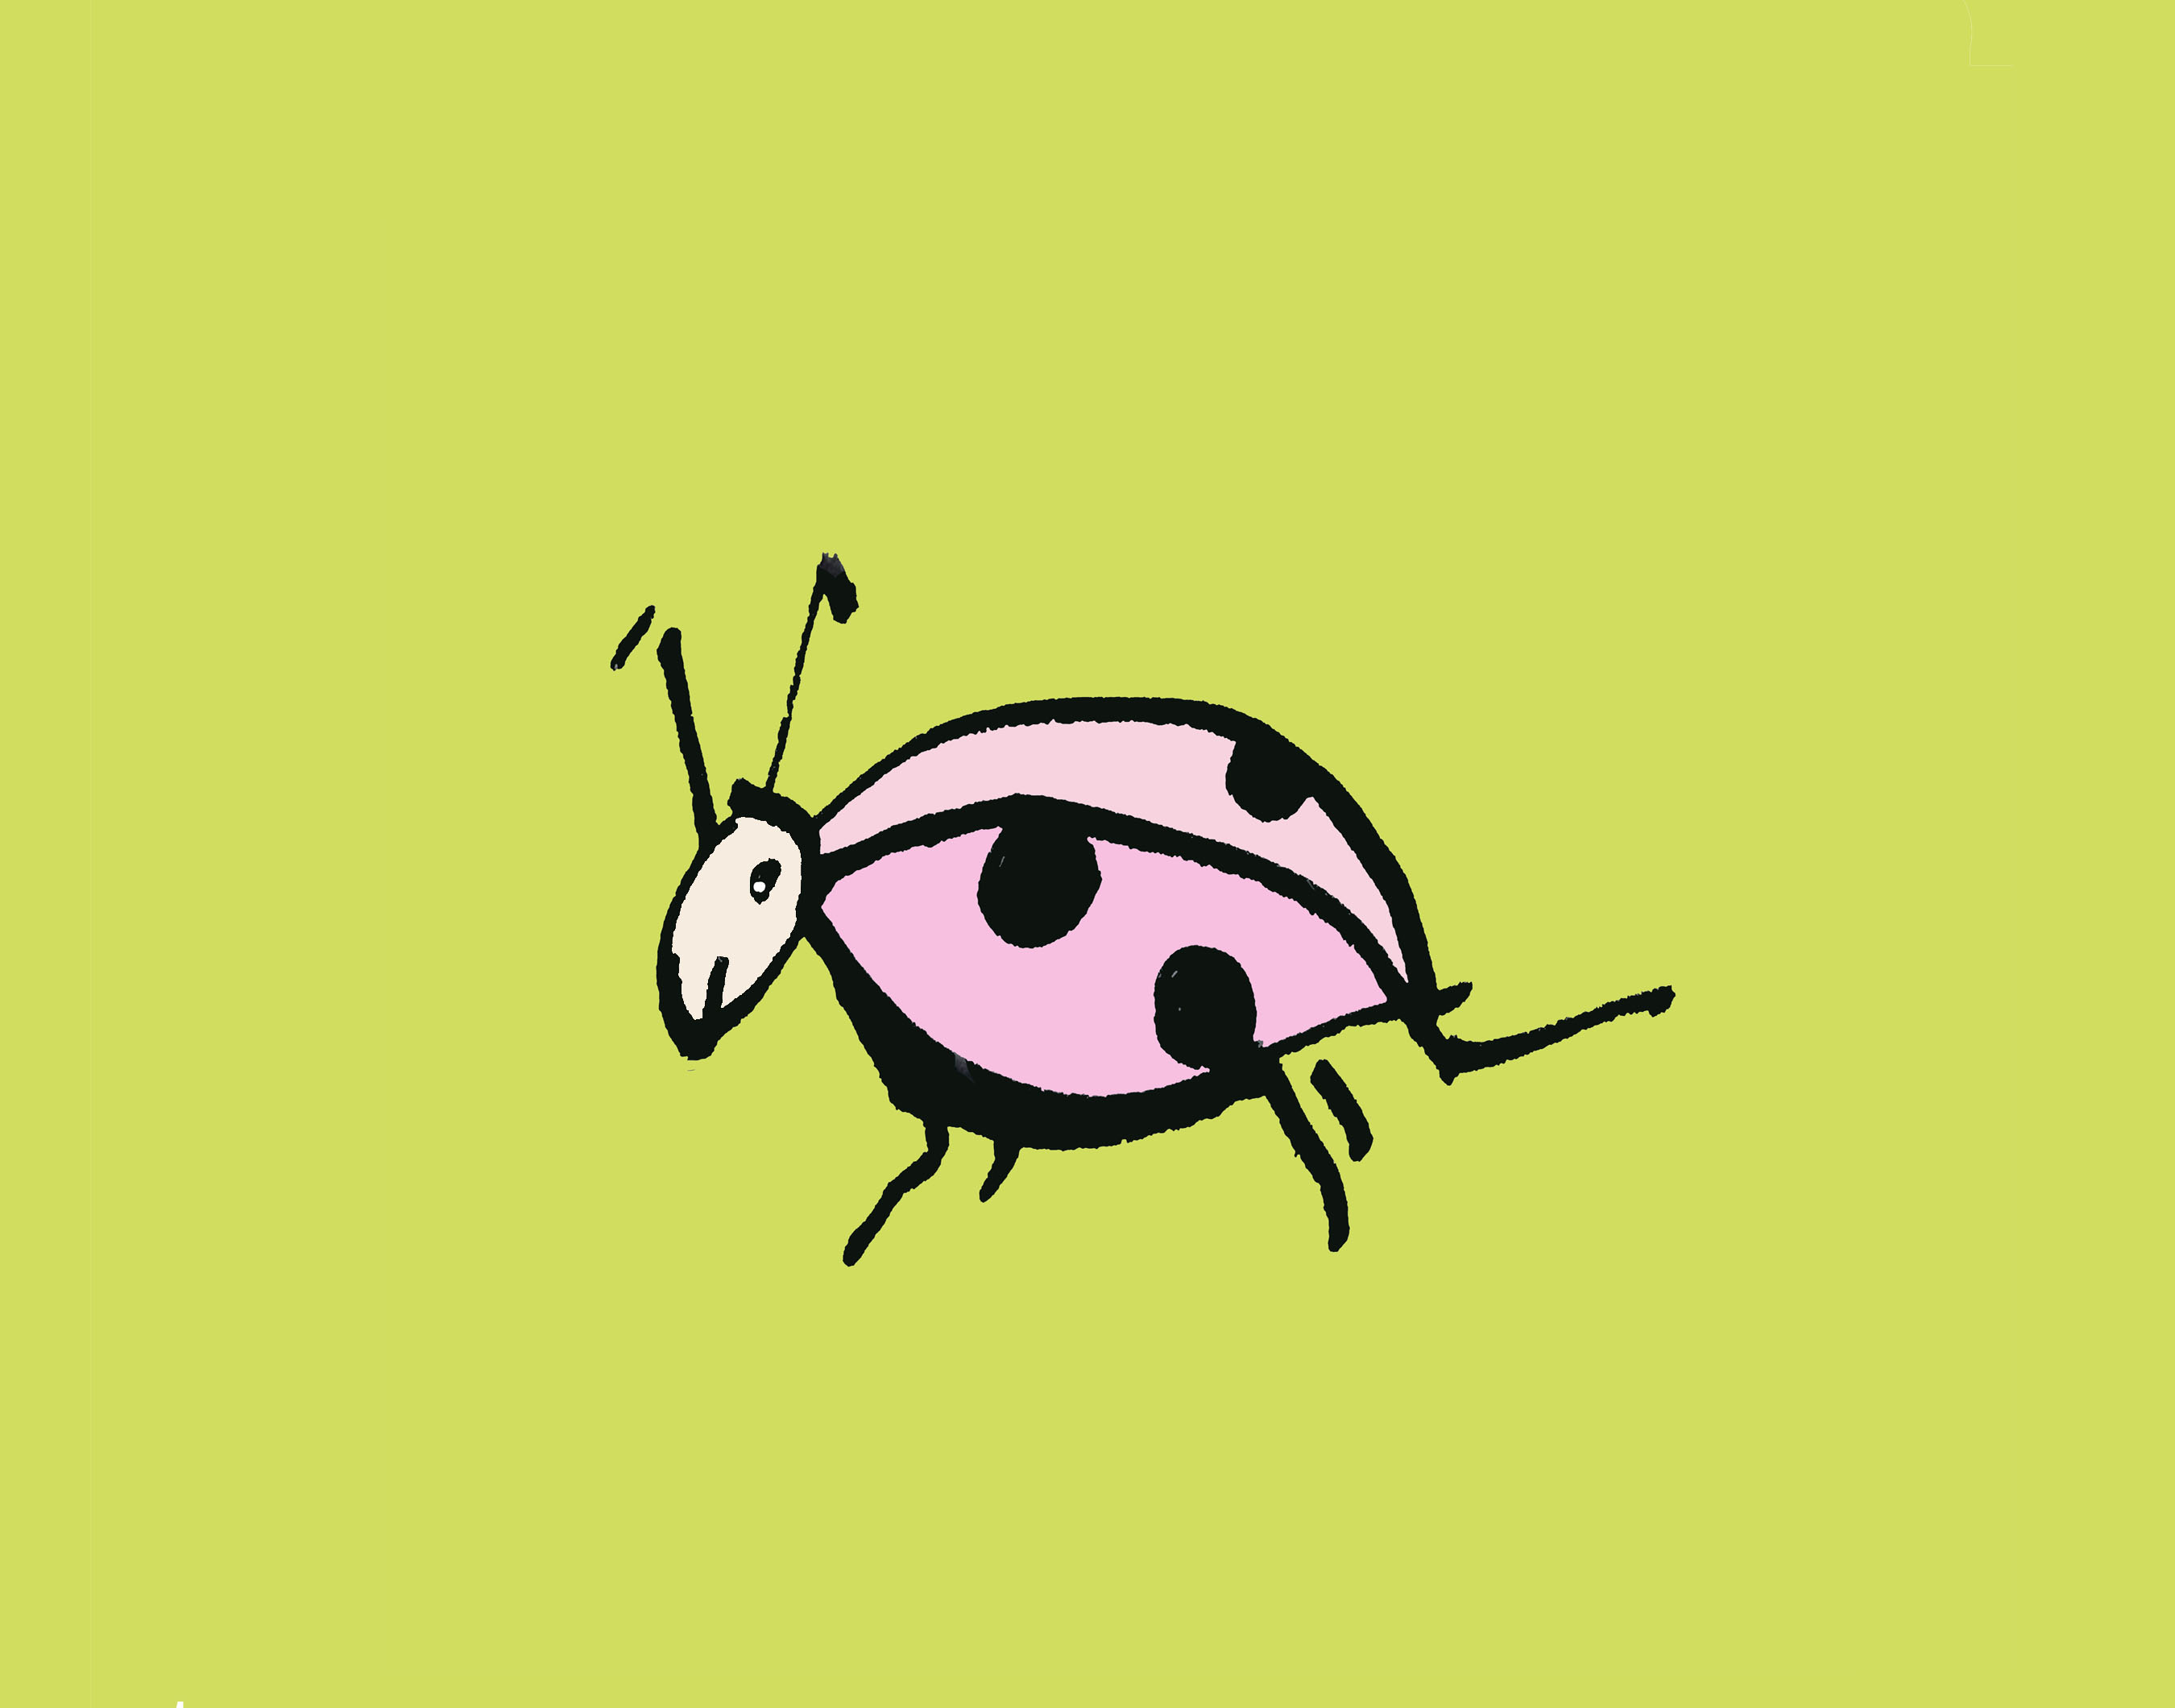 art every day number 490 ladybug pink nature bug illustration